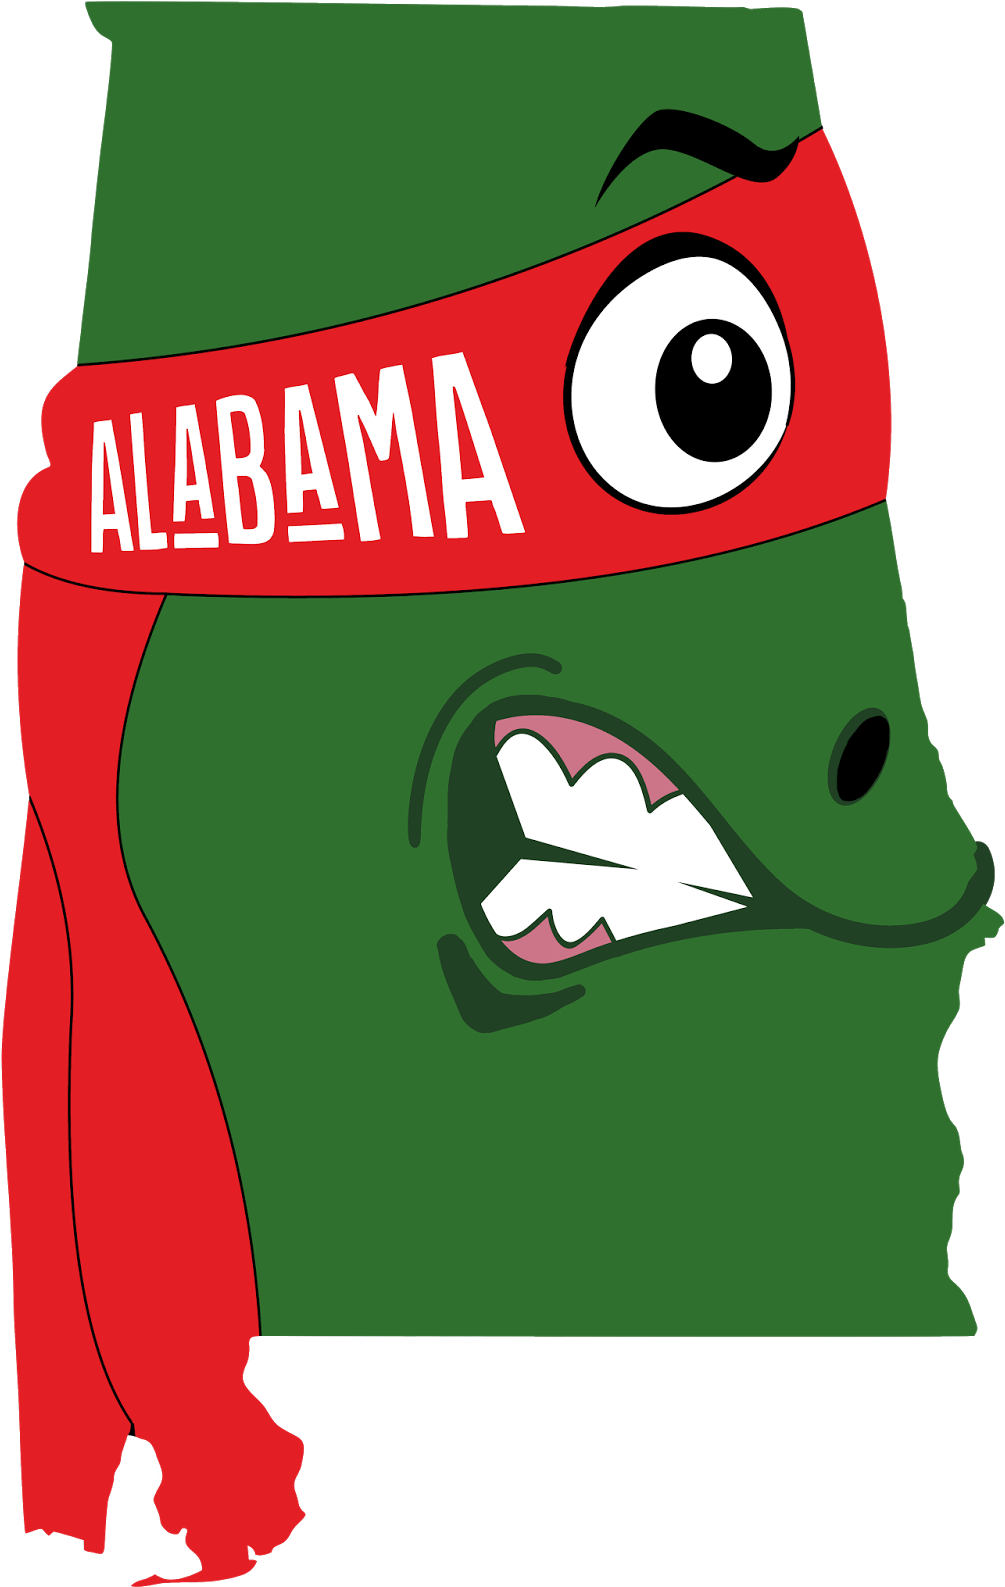 A Funny Outline Map Of Alabama - State Of Alabama (1334x1600)